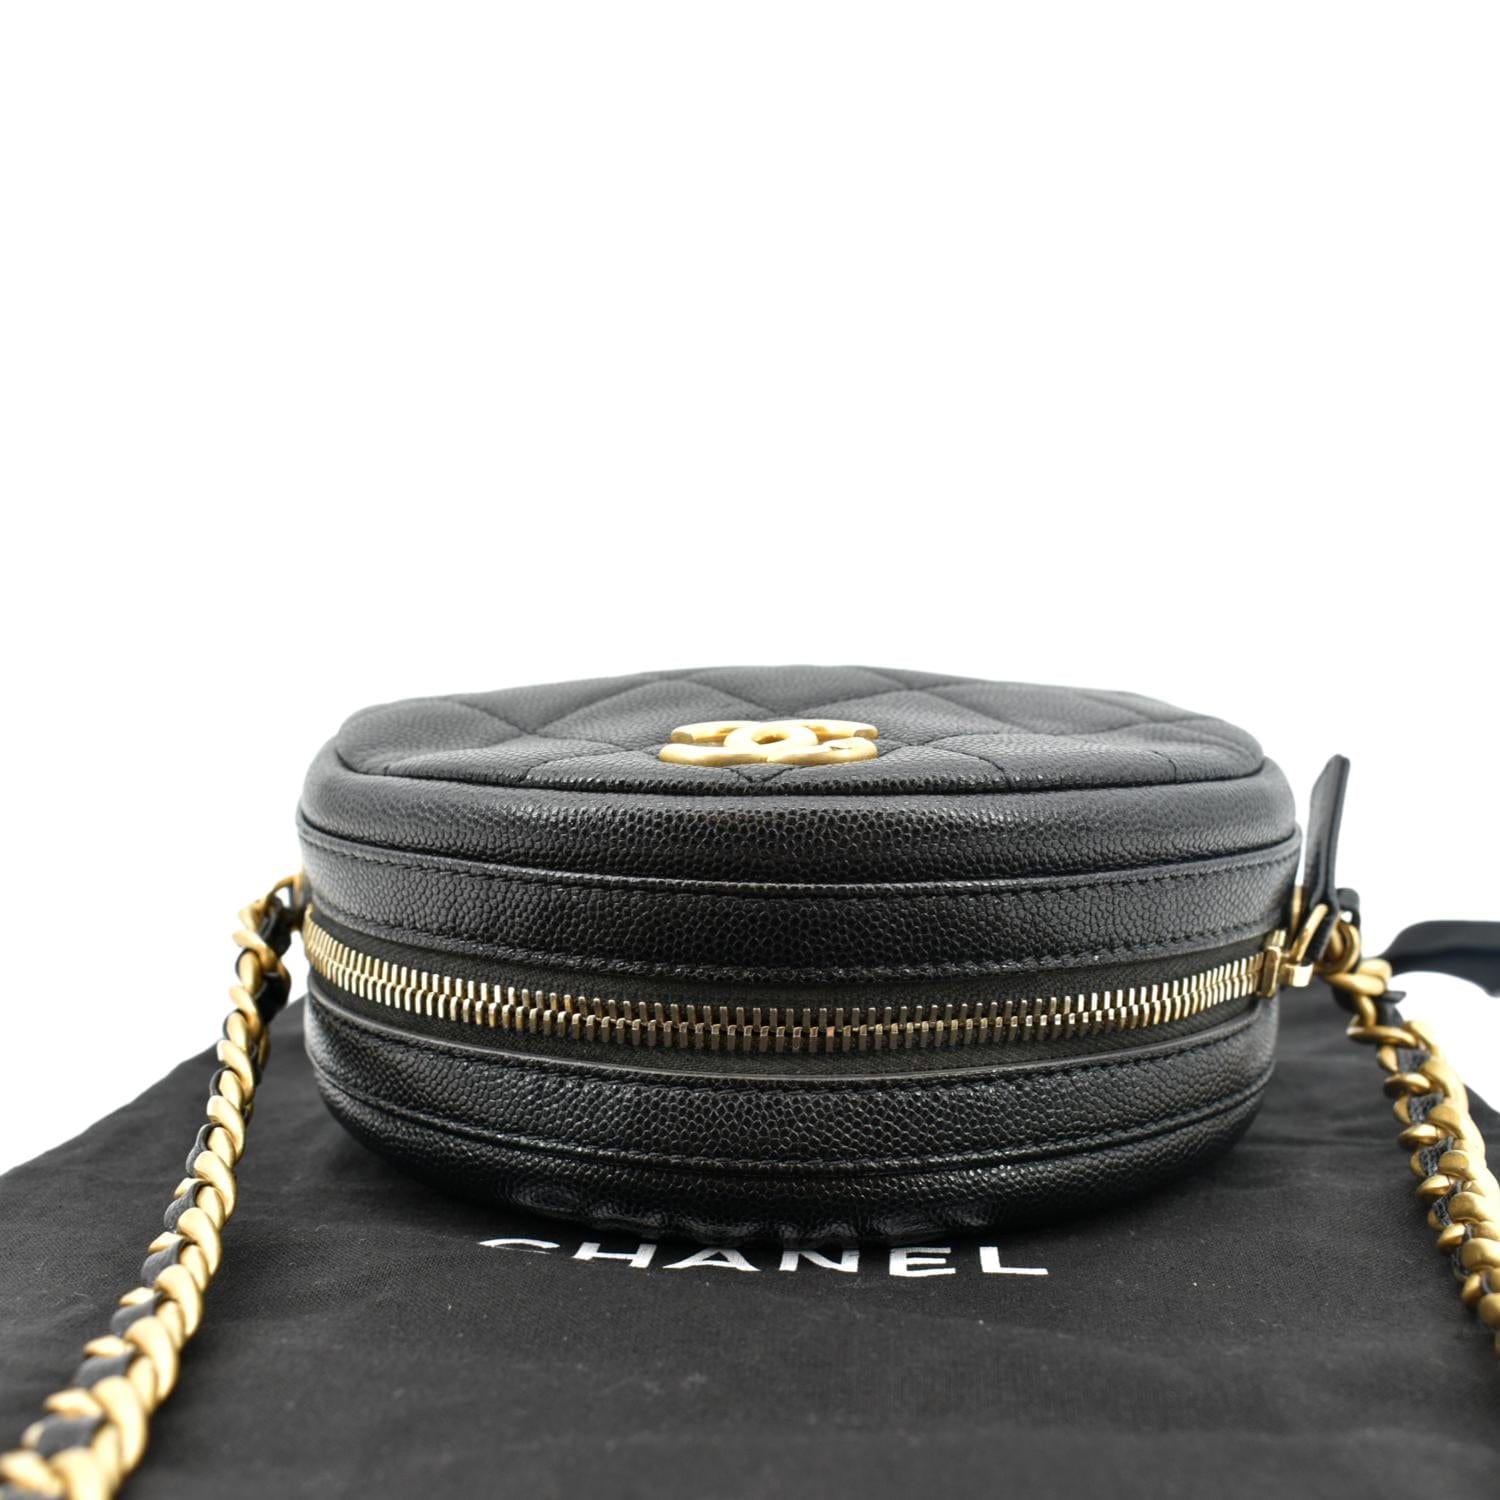 Chanel Round Classic Chain Clutch  Bragmybag  Chanel bag Purses Handbags  on sale